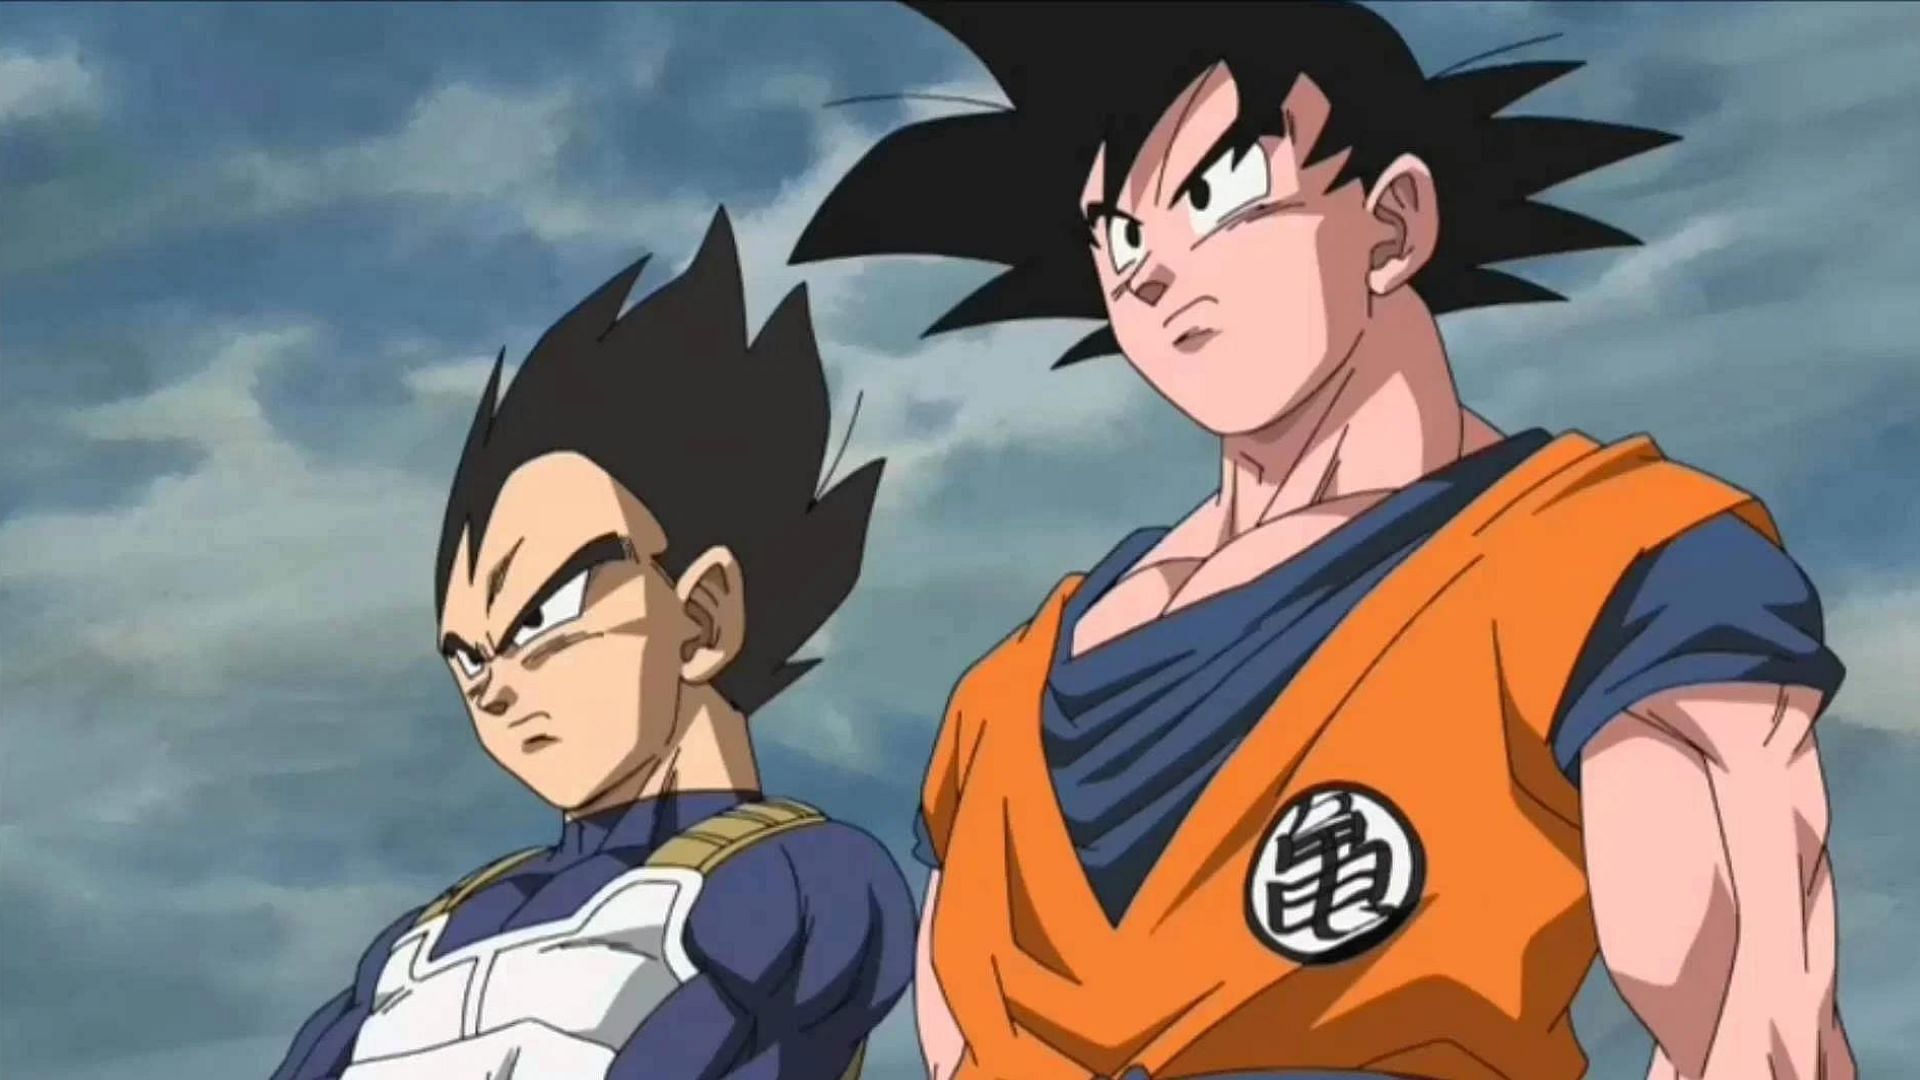 Goku and Vegeta as seen in Dragon Ball Z (Image via Toei Animation)